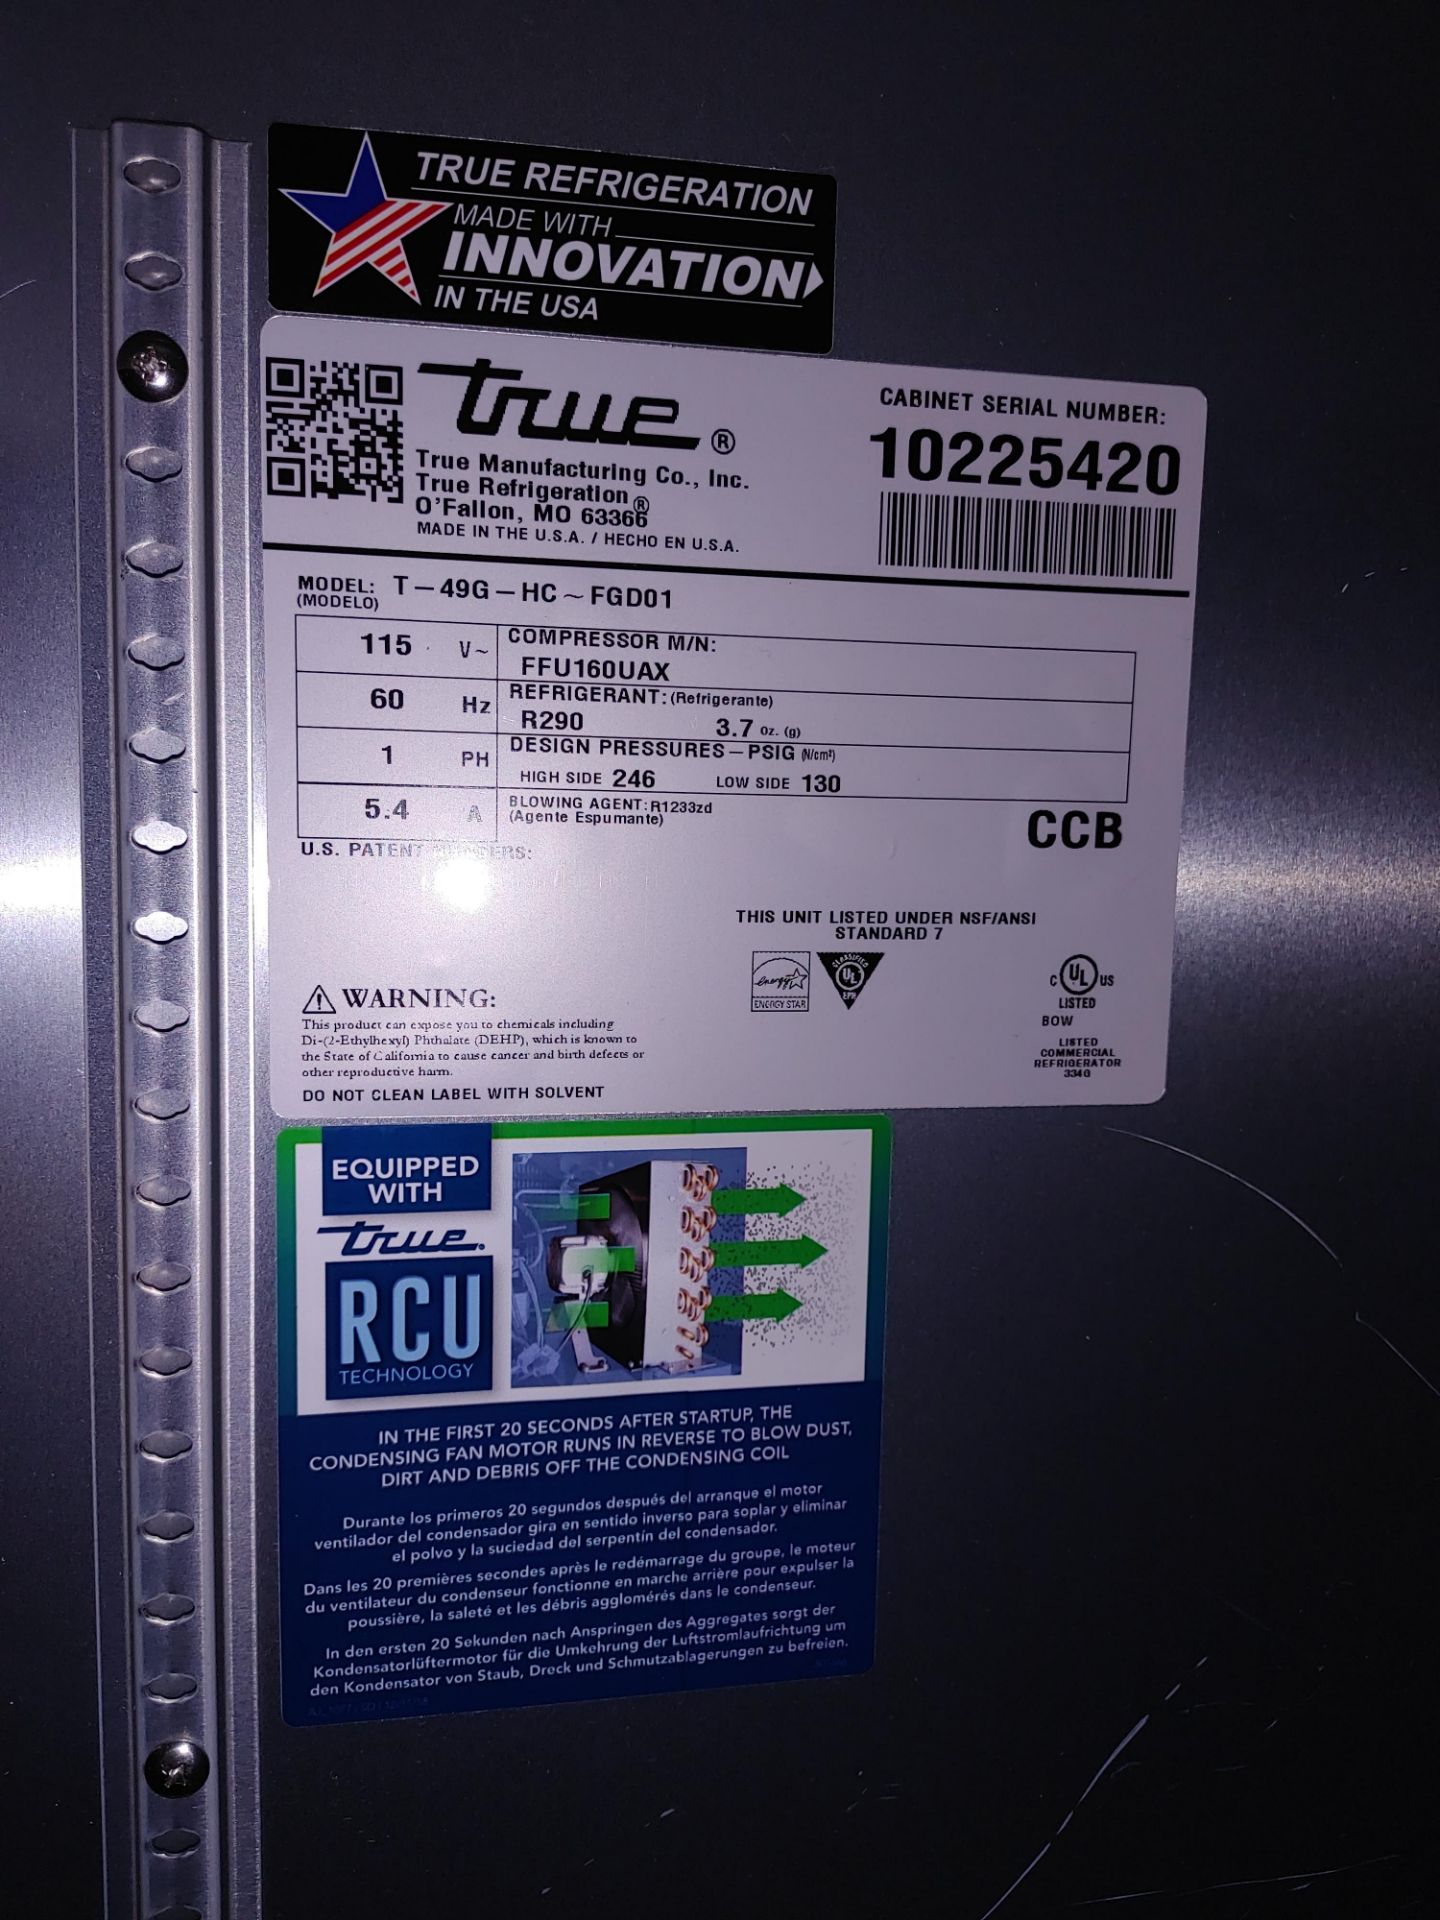 True "T-49G-HC-FGD01" 2 Door Glass Front Refrigerator S/N 10225420 - Image 2 of 2